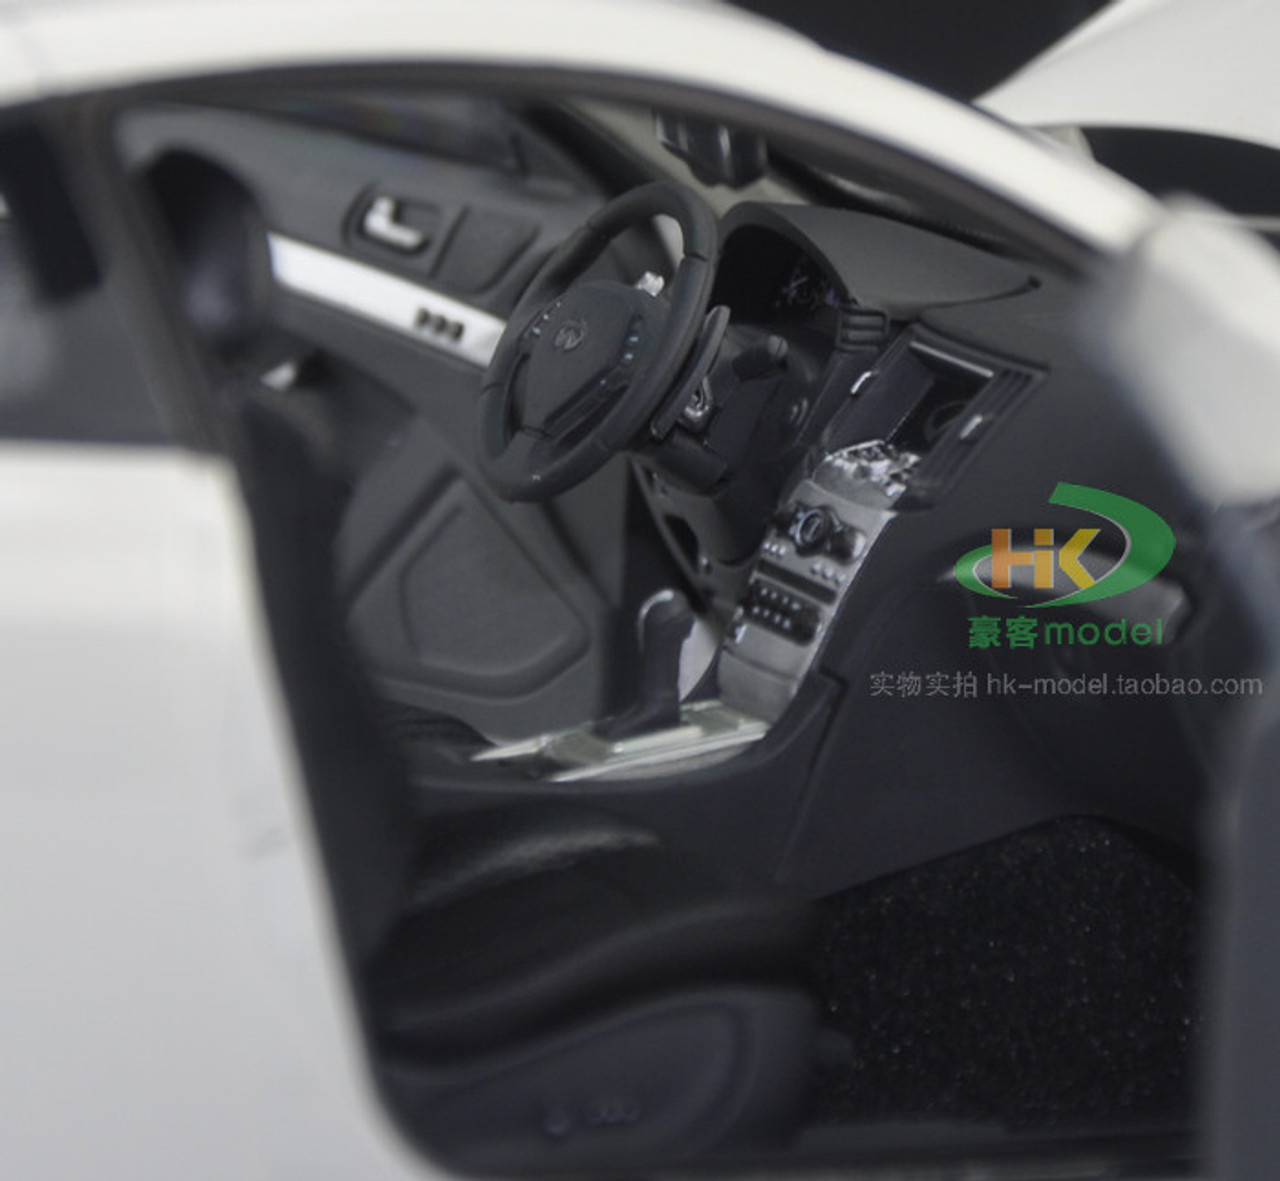 1/18 Dealer Edition Infiniti G37S Q60 Coupe (White) Diecast Car Model